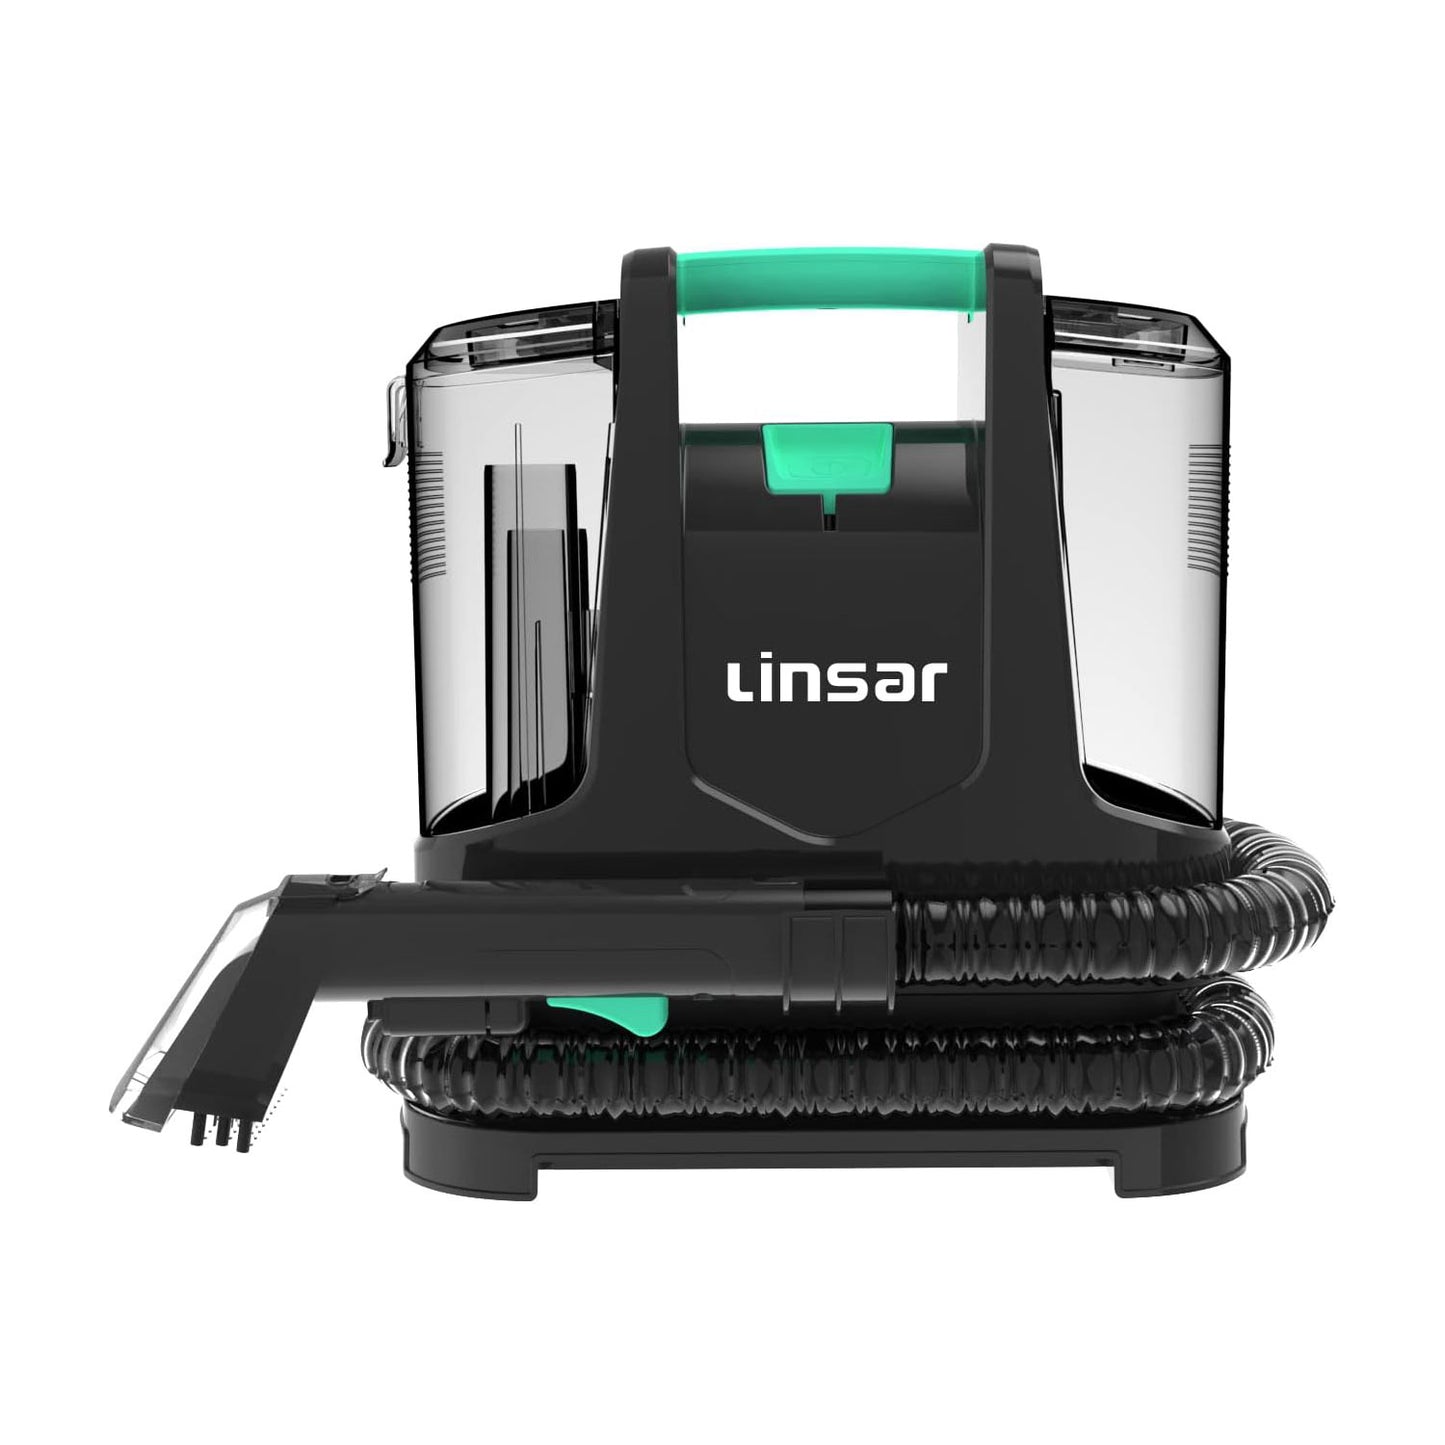 Linsar brand multi-washing vacuum cleaner